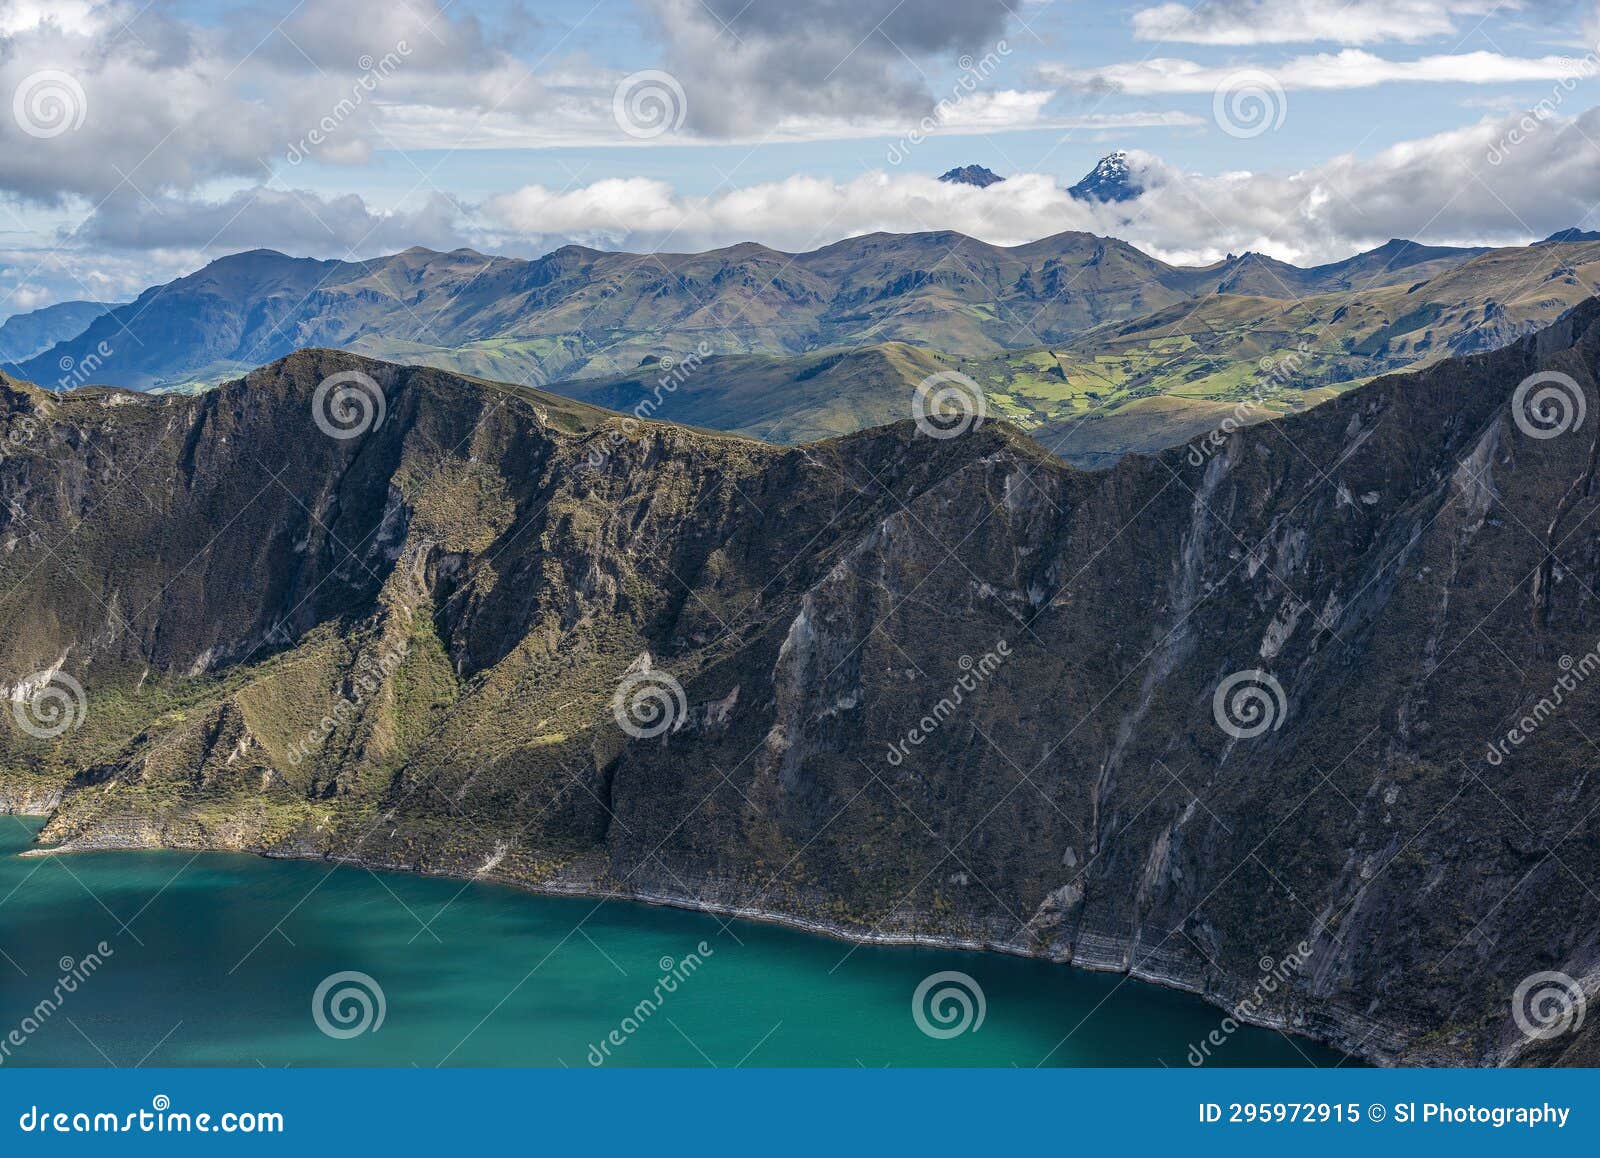 Quilotoa Lagoon and Ilinizas Peaks, Ecuador Stock Image - Image of ...